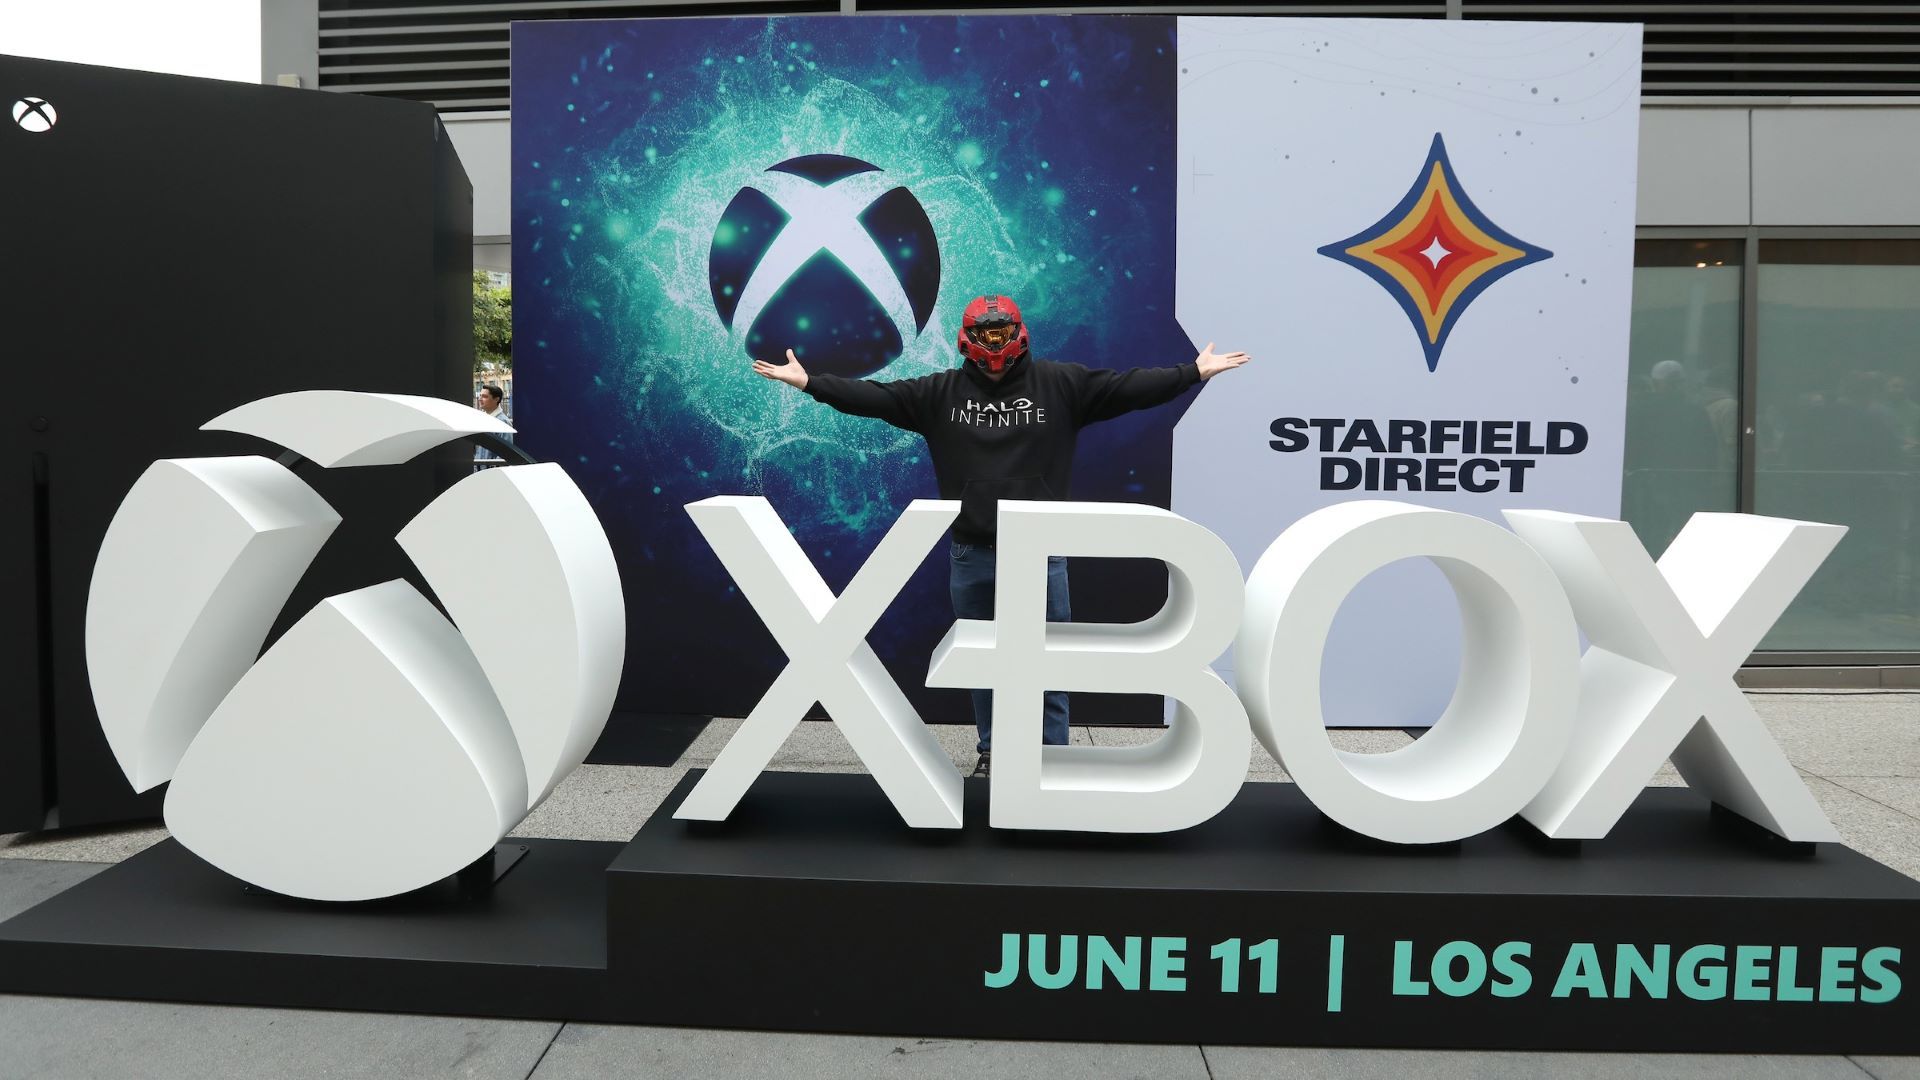 Stafield Direct is so OVERWHELMING WOW! XBOX Showcase 2023 #xboxshowc